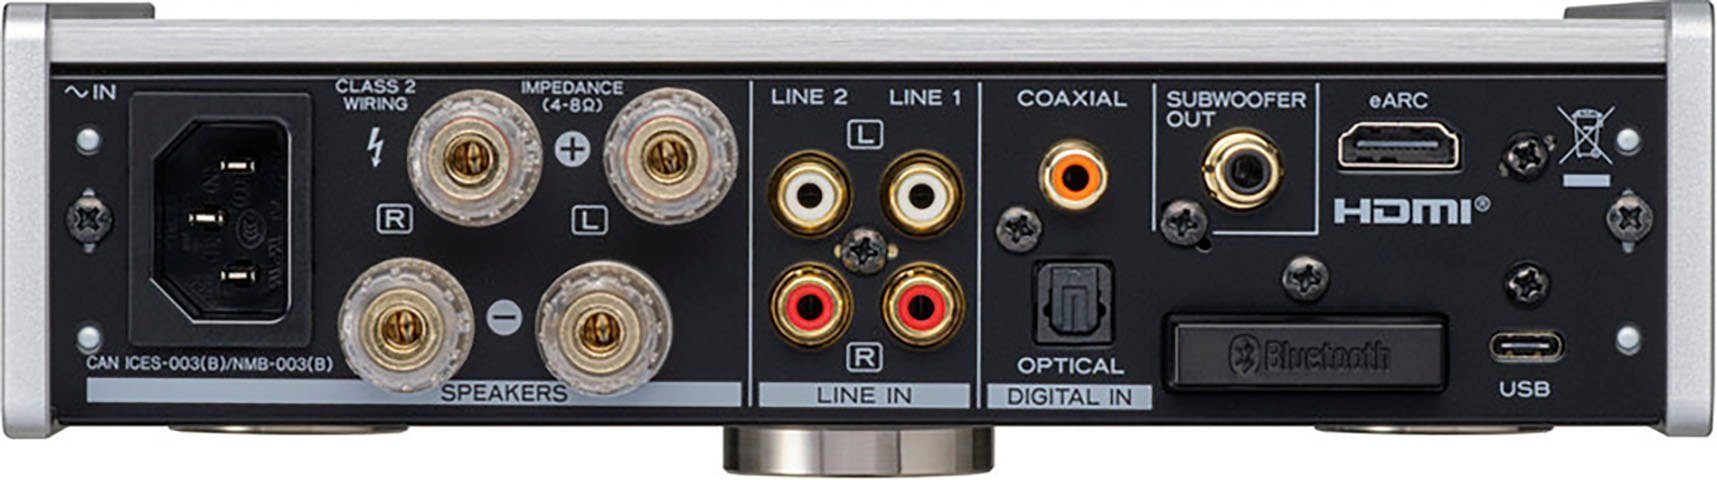 TEAC AI-303 2, USB 100 Kanäle: (Anzahl W) silberfarben Audioverstärker DAC